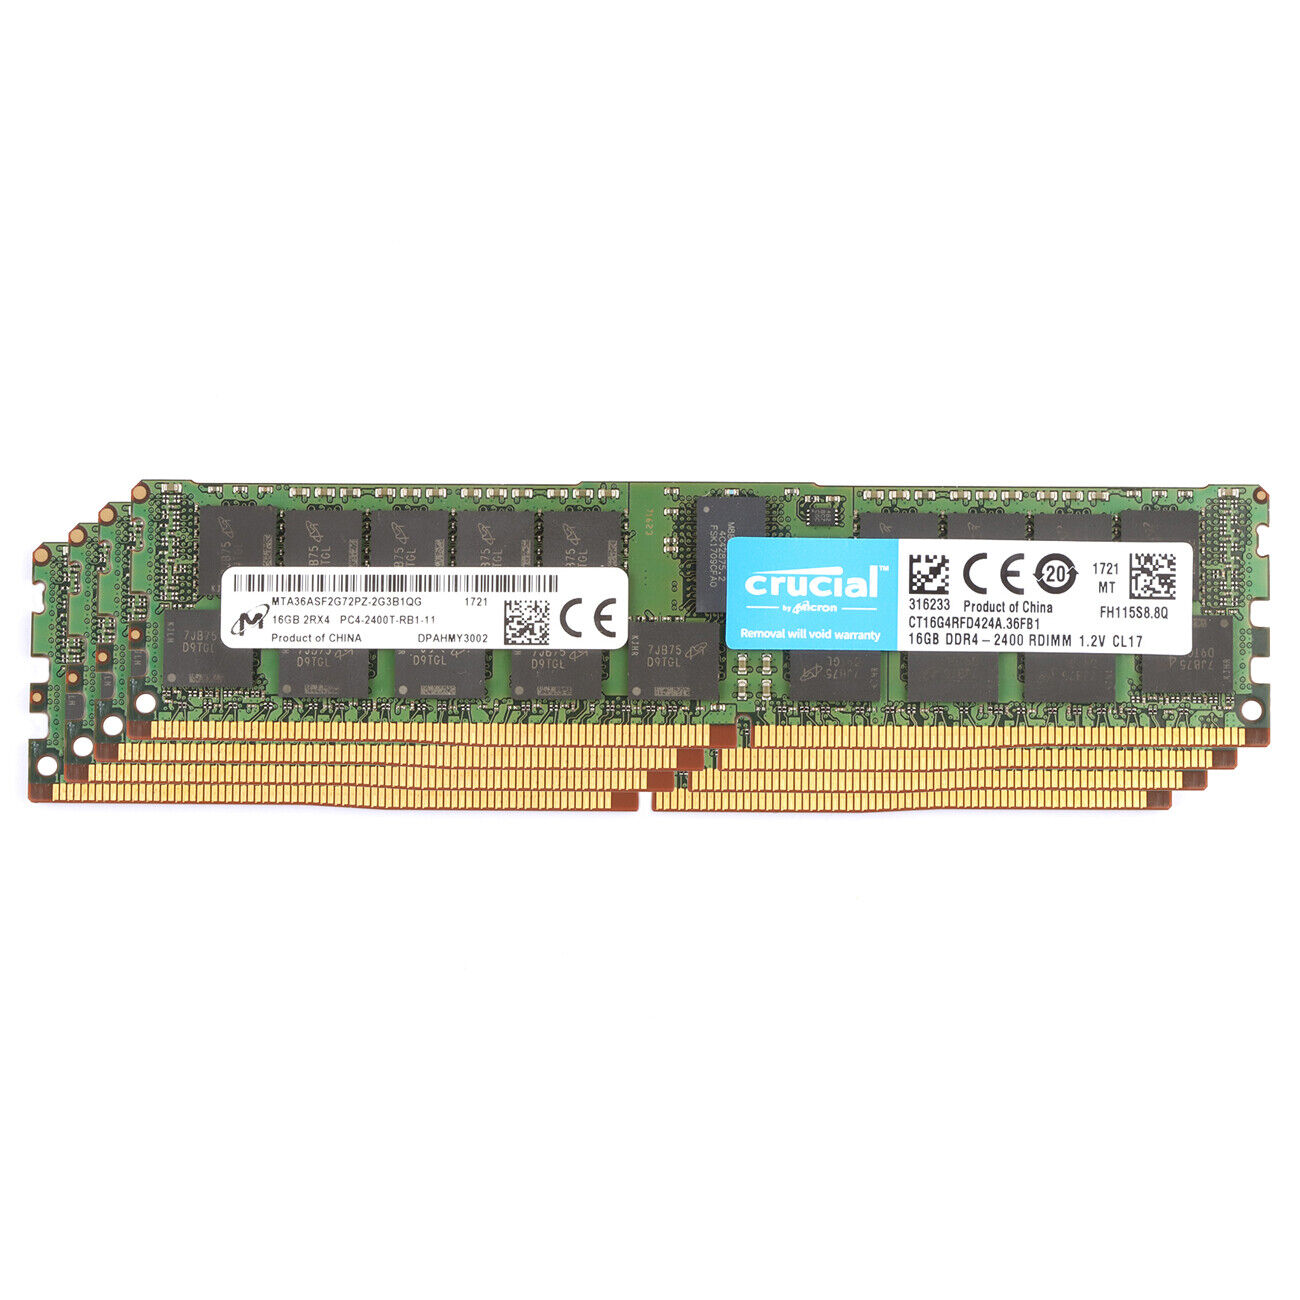 Crucial 64GB (4x 16GB) 2400MHz DDR4 ECC RDIMM PC4-19200 1.2V 2Rx4 Server Memory